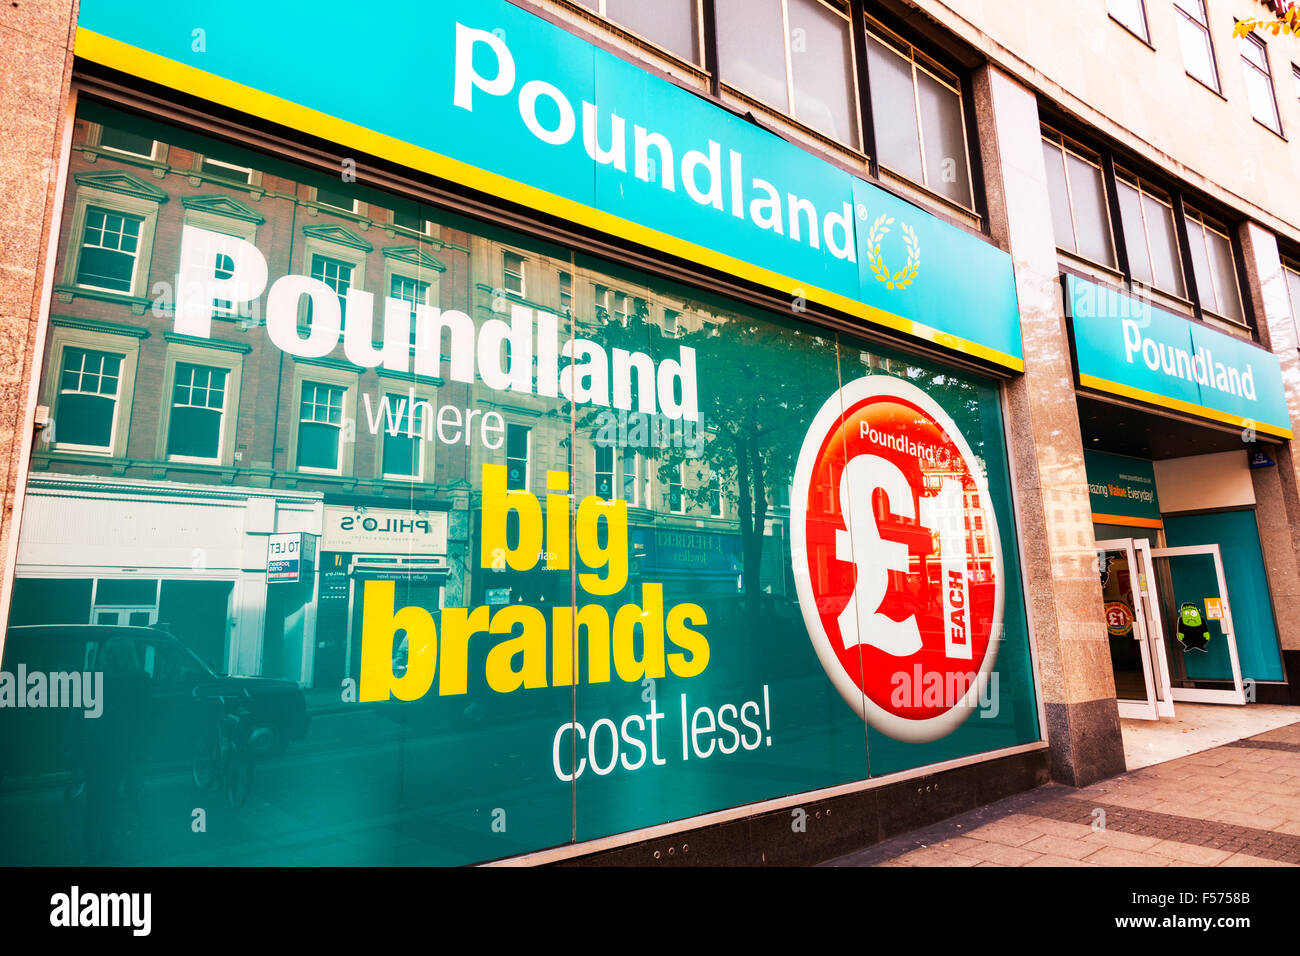 poundland pound land Shop store name sign building exterior facade entrance Nottingham City centre UK GB England Nottinghamshire Stock Photo